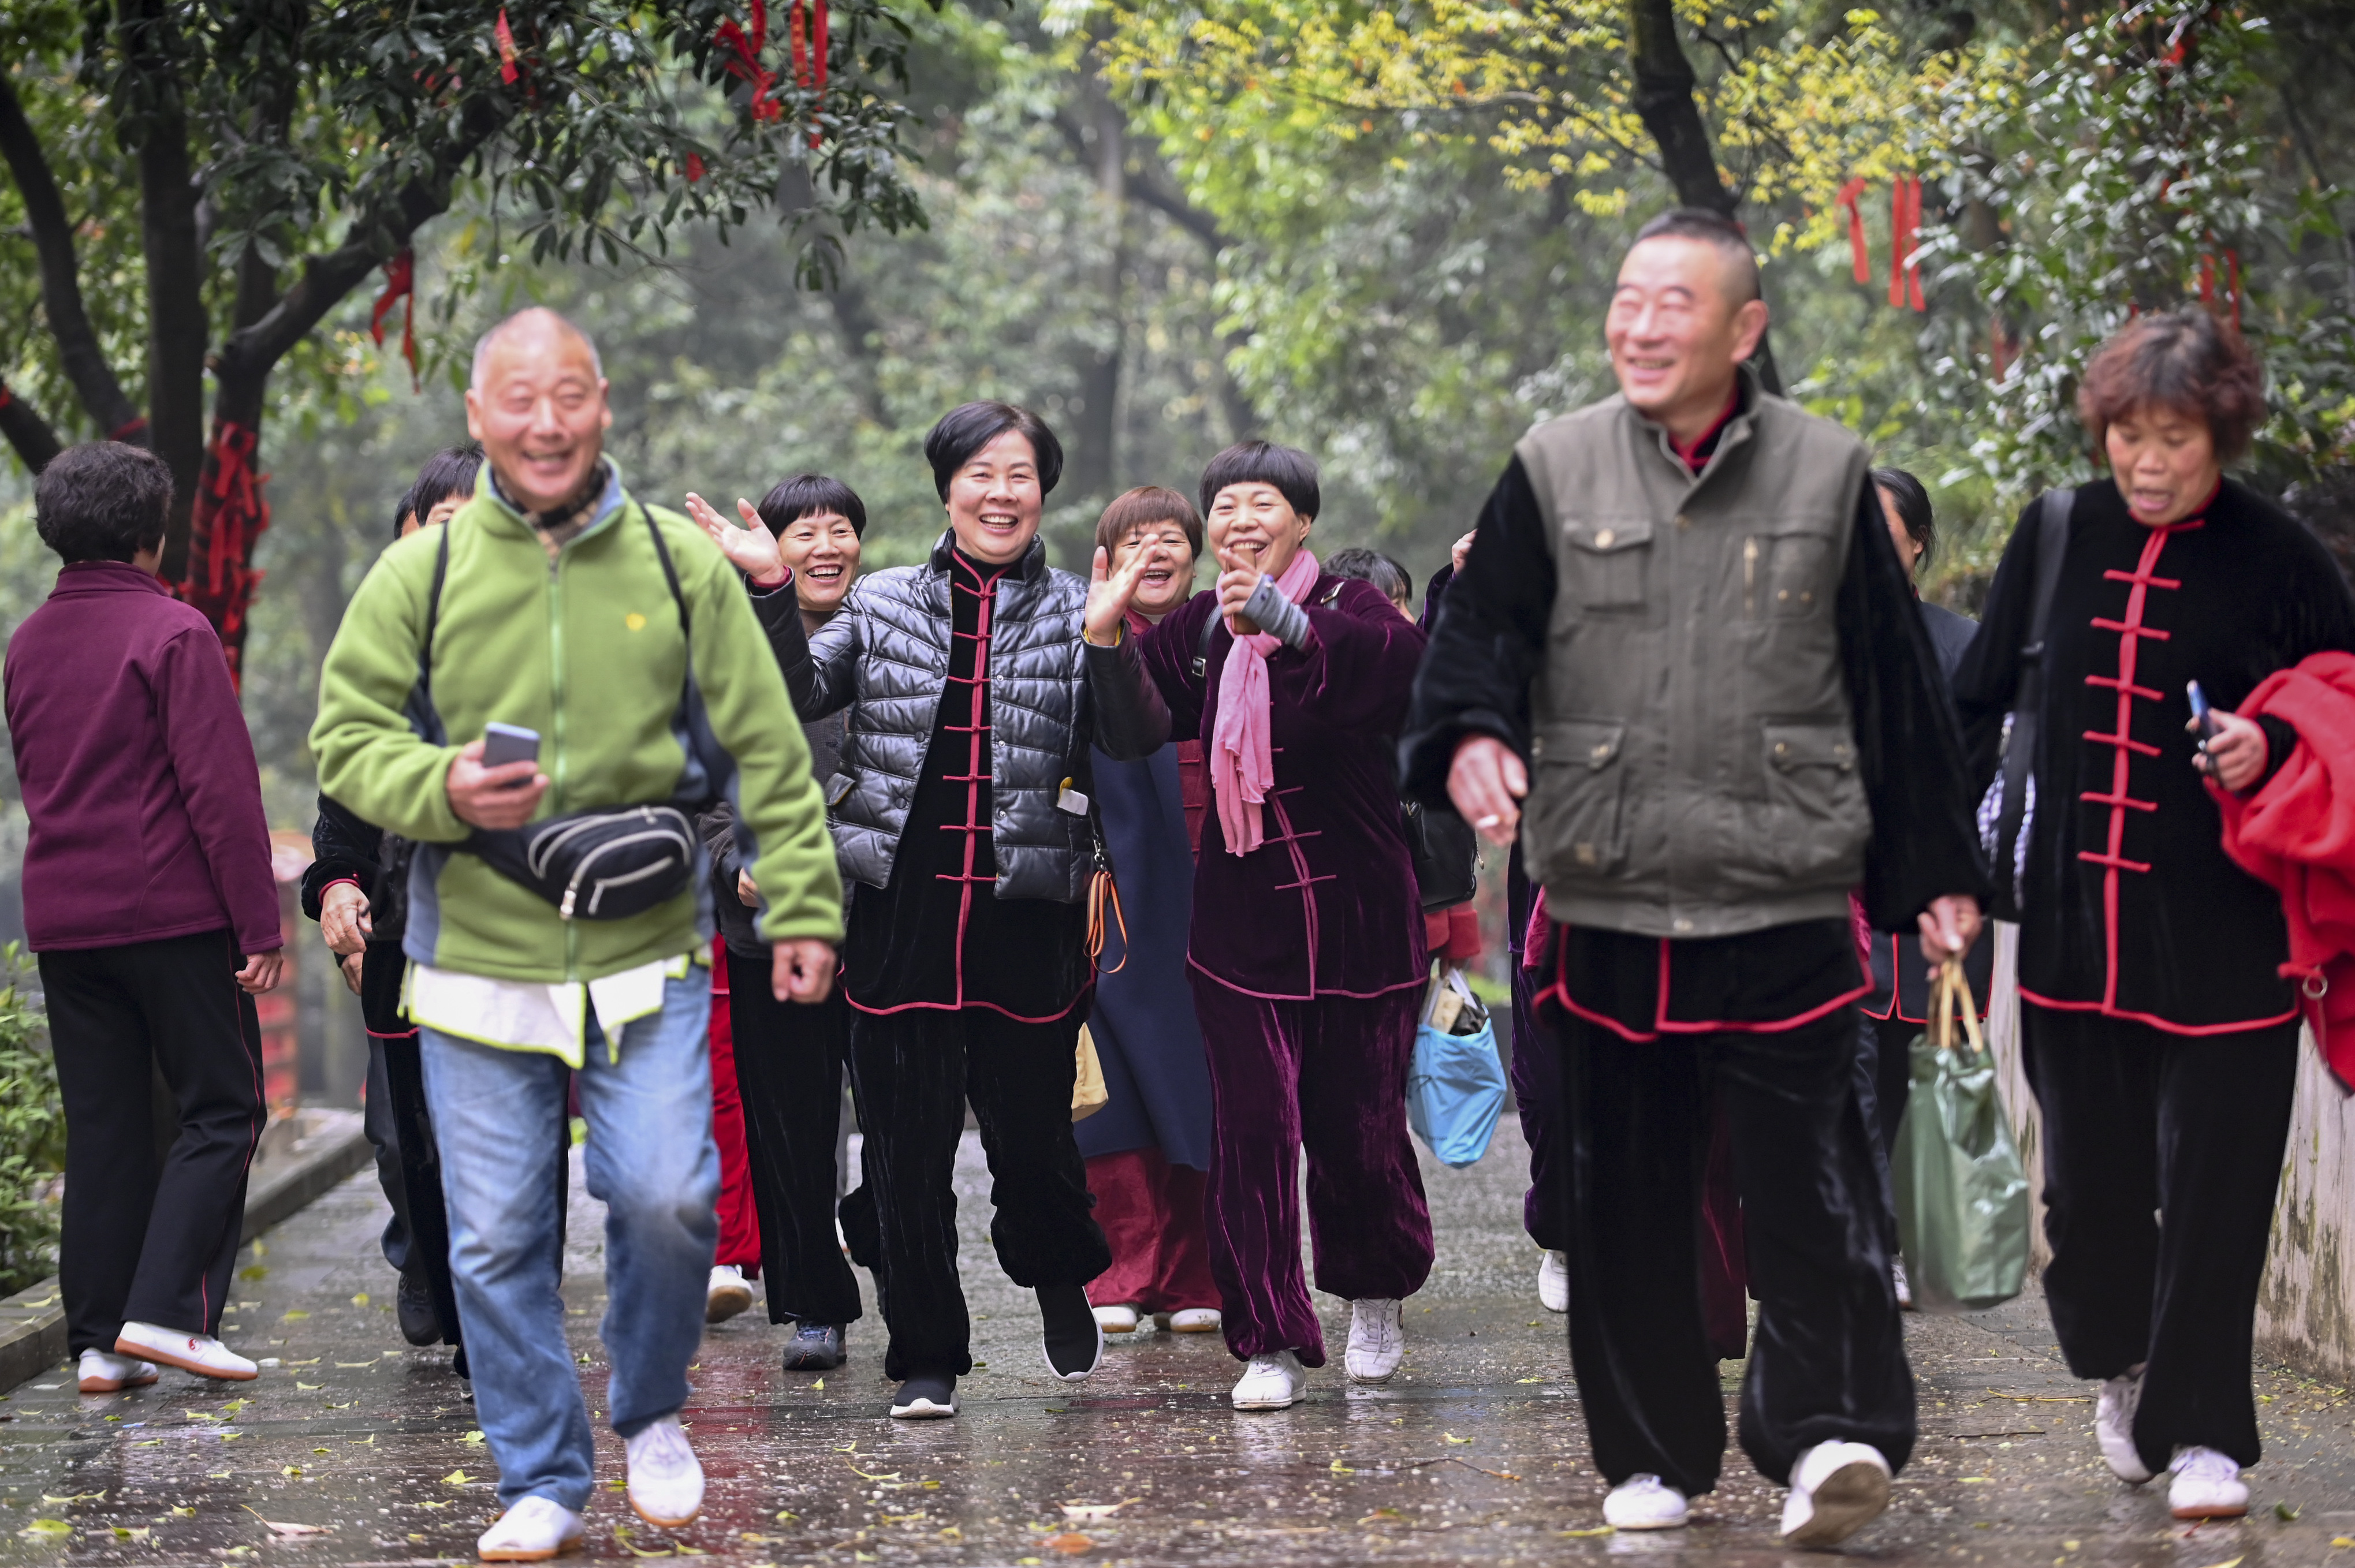 Seniors spending more on travel - Chinadaily.com.cn